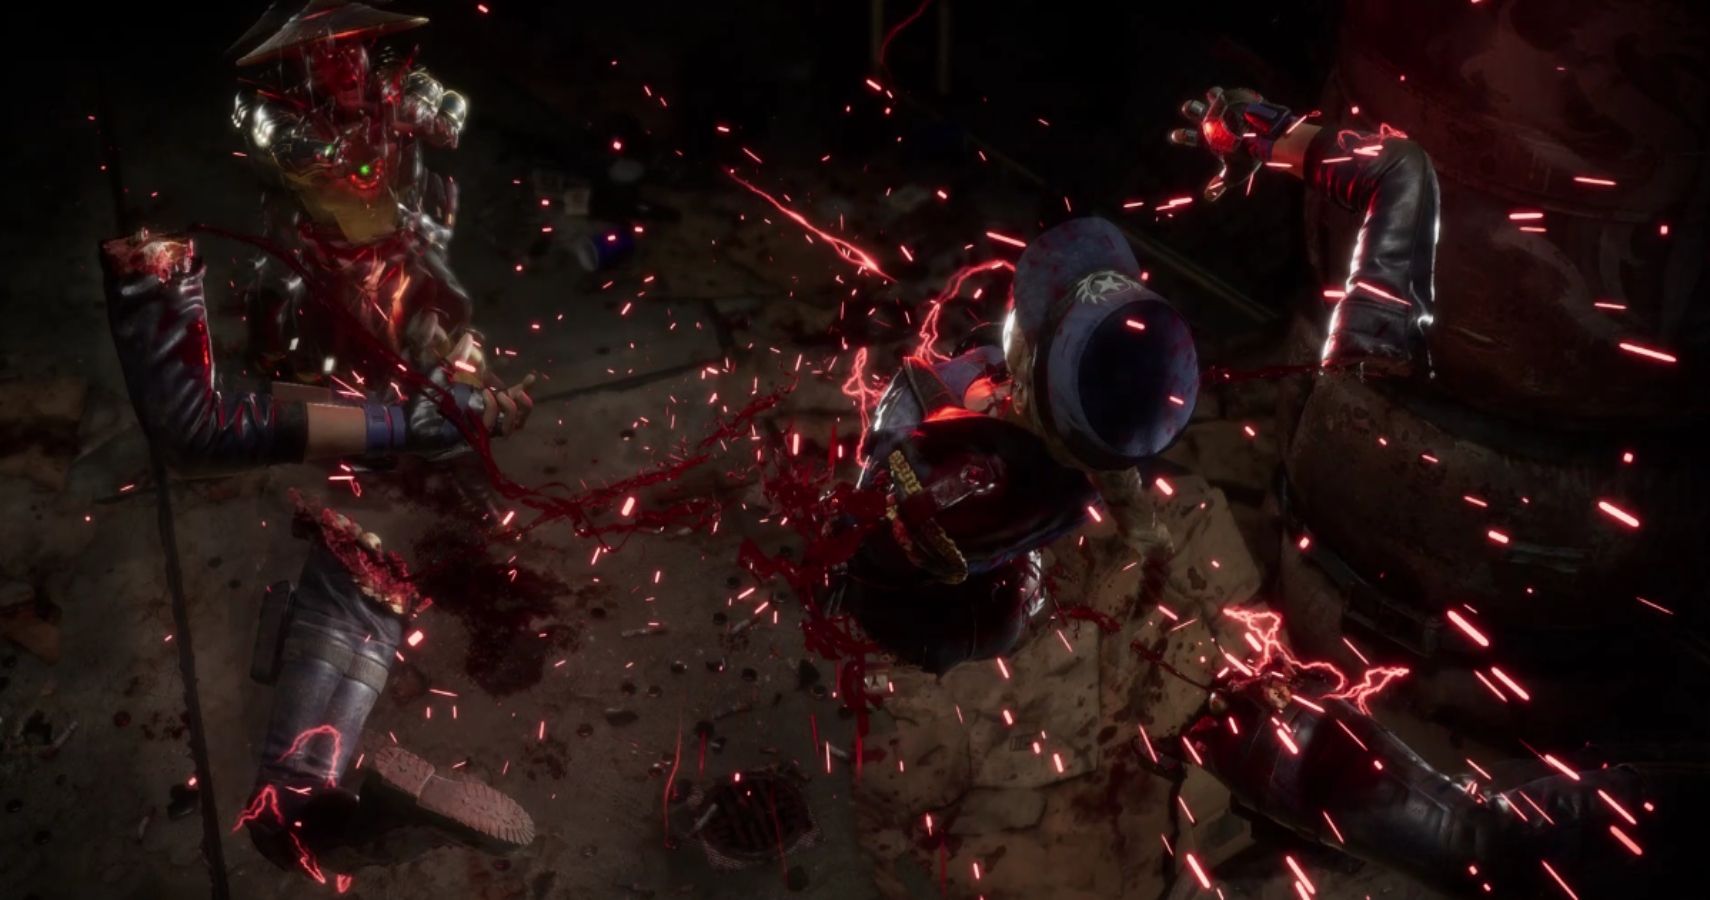 Mortal Kombat 11 Fatalities as told by an elderly couple: He's only got  half a body